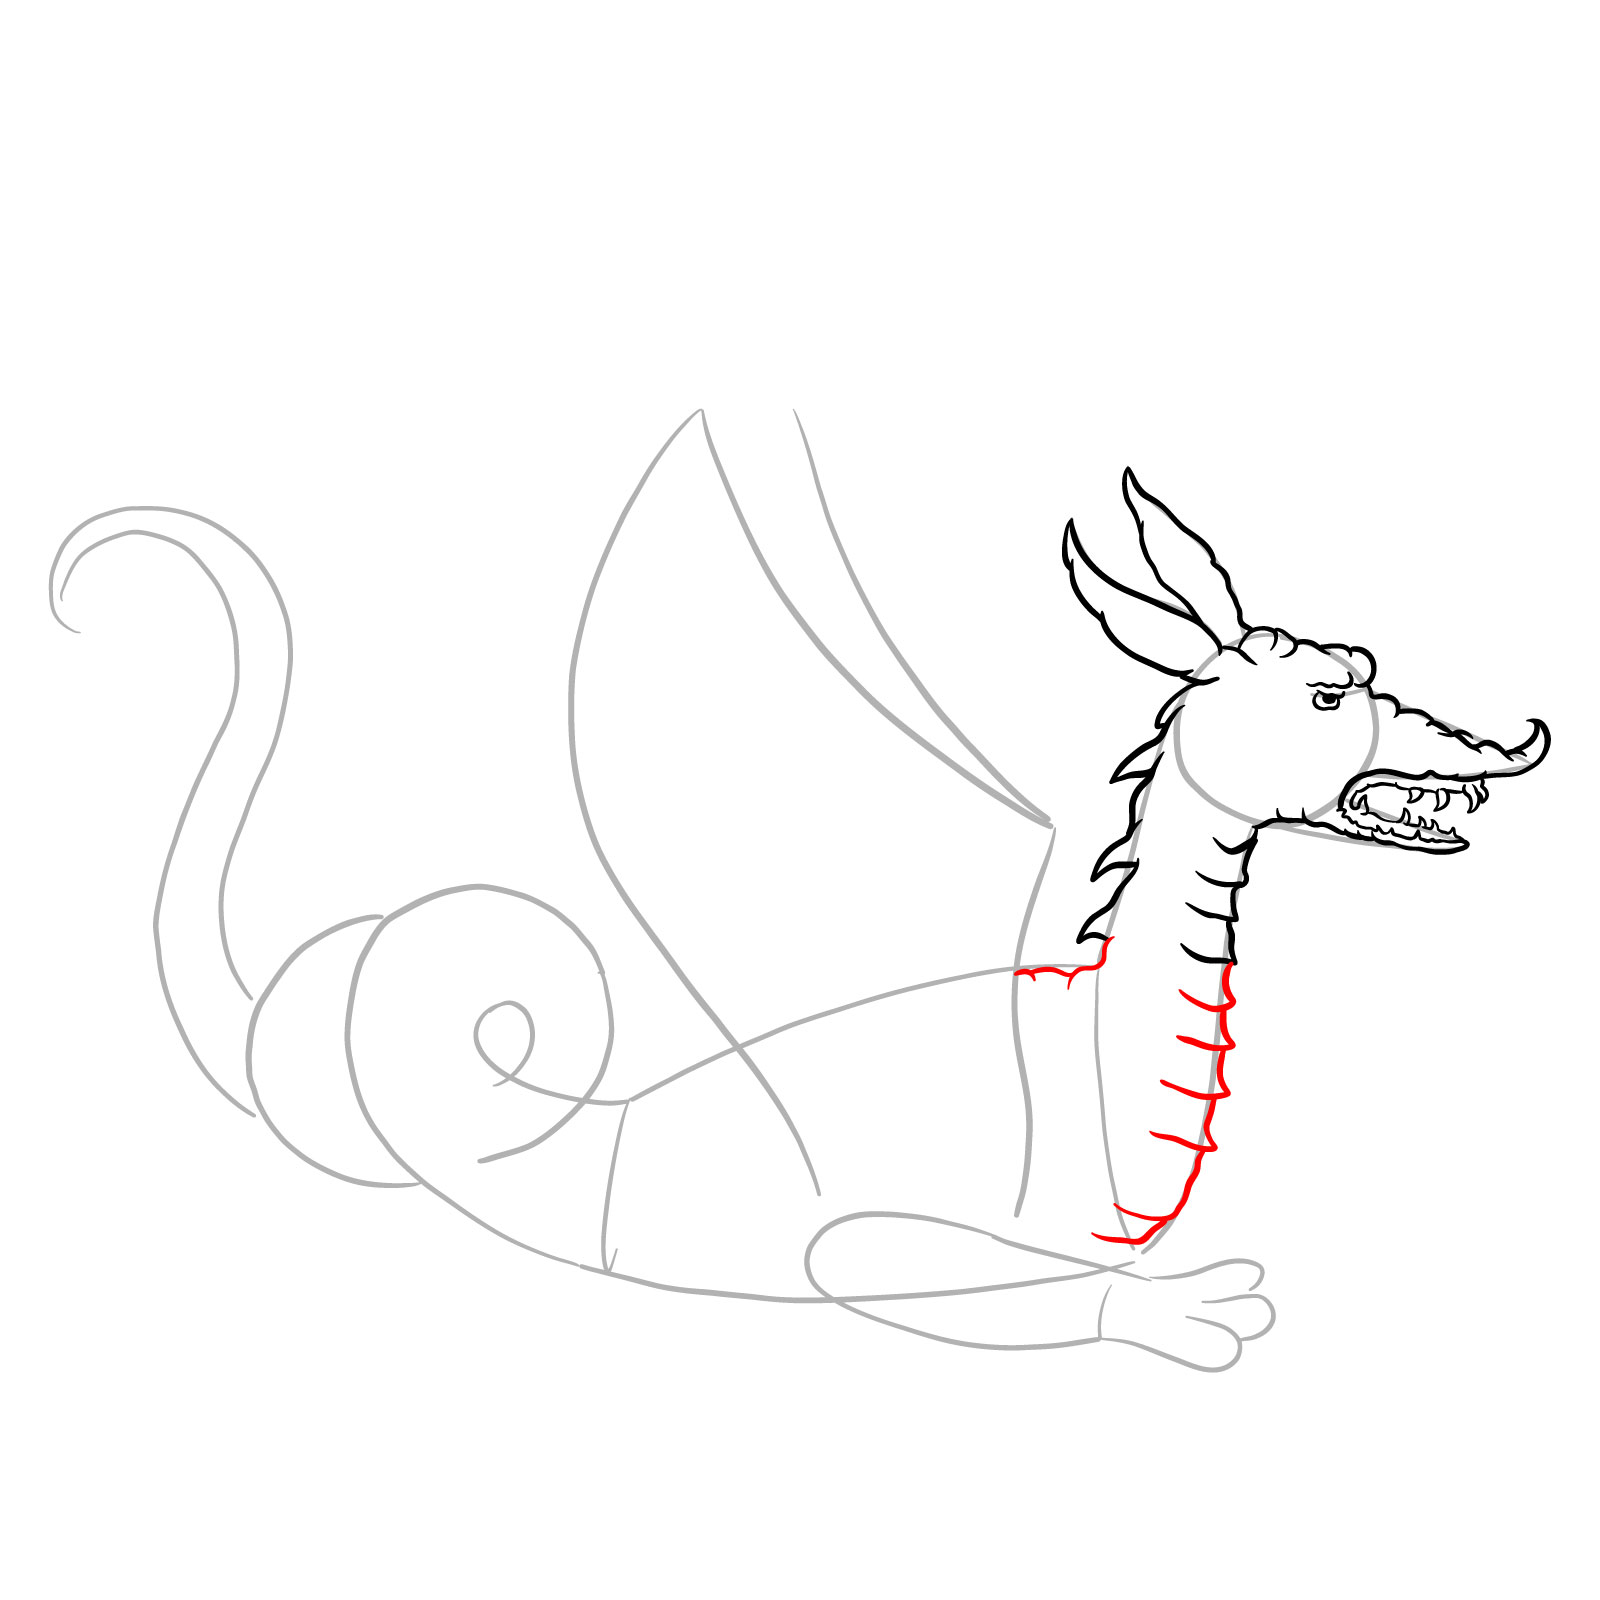 How to draw a Knucker dragon - step 11